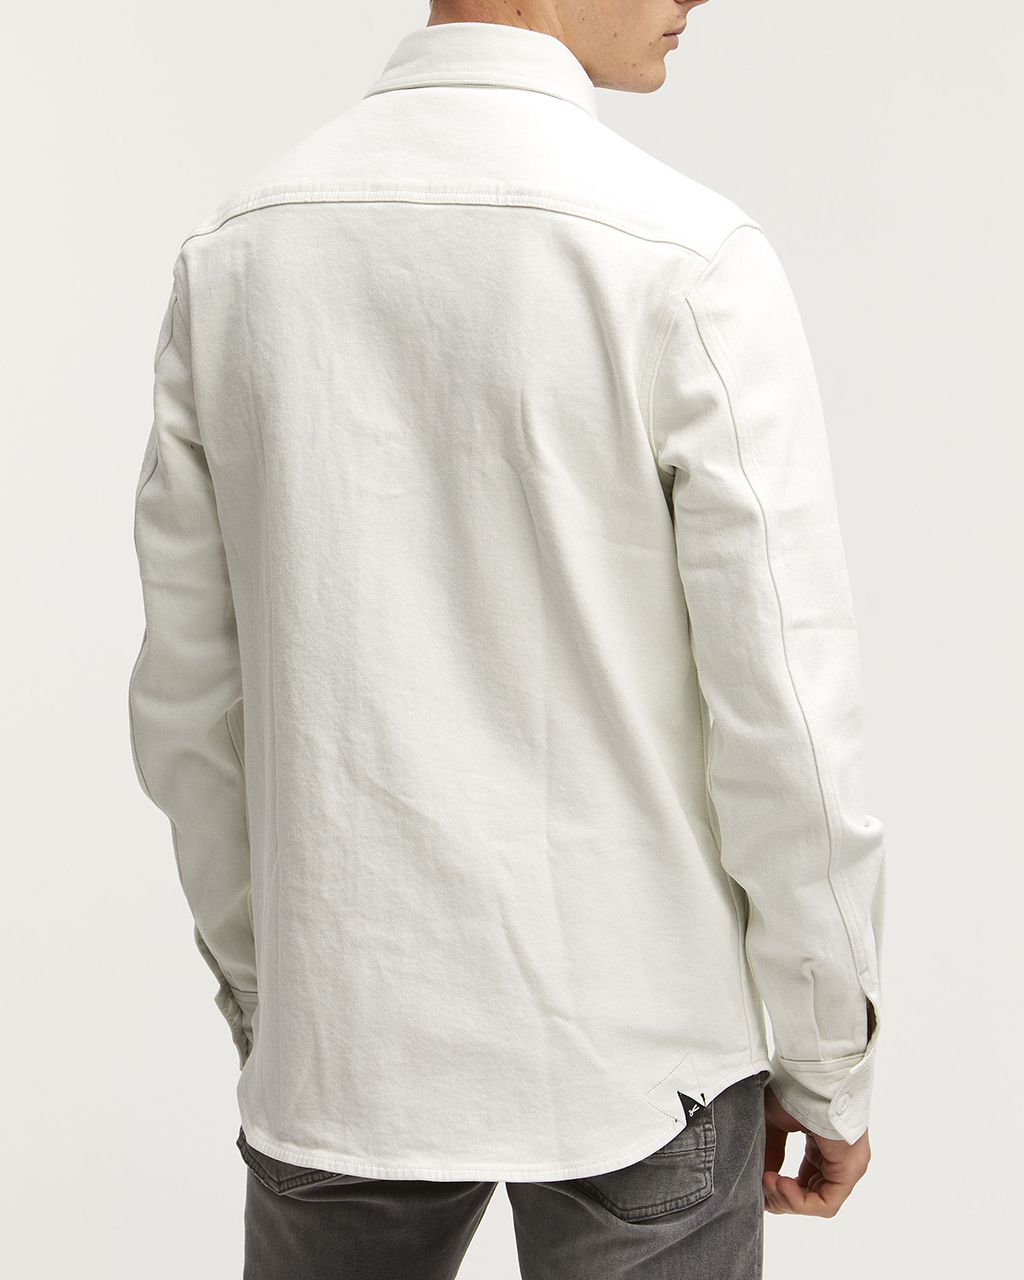 DENHAM Burton Overshirt Off white 075827-001-L